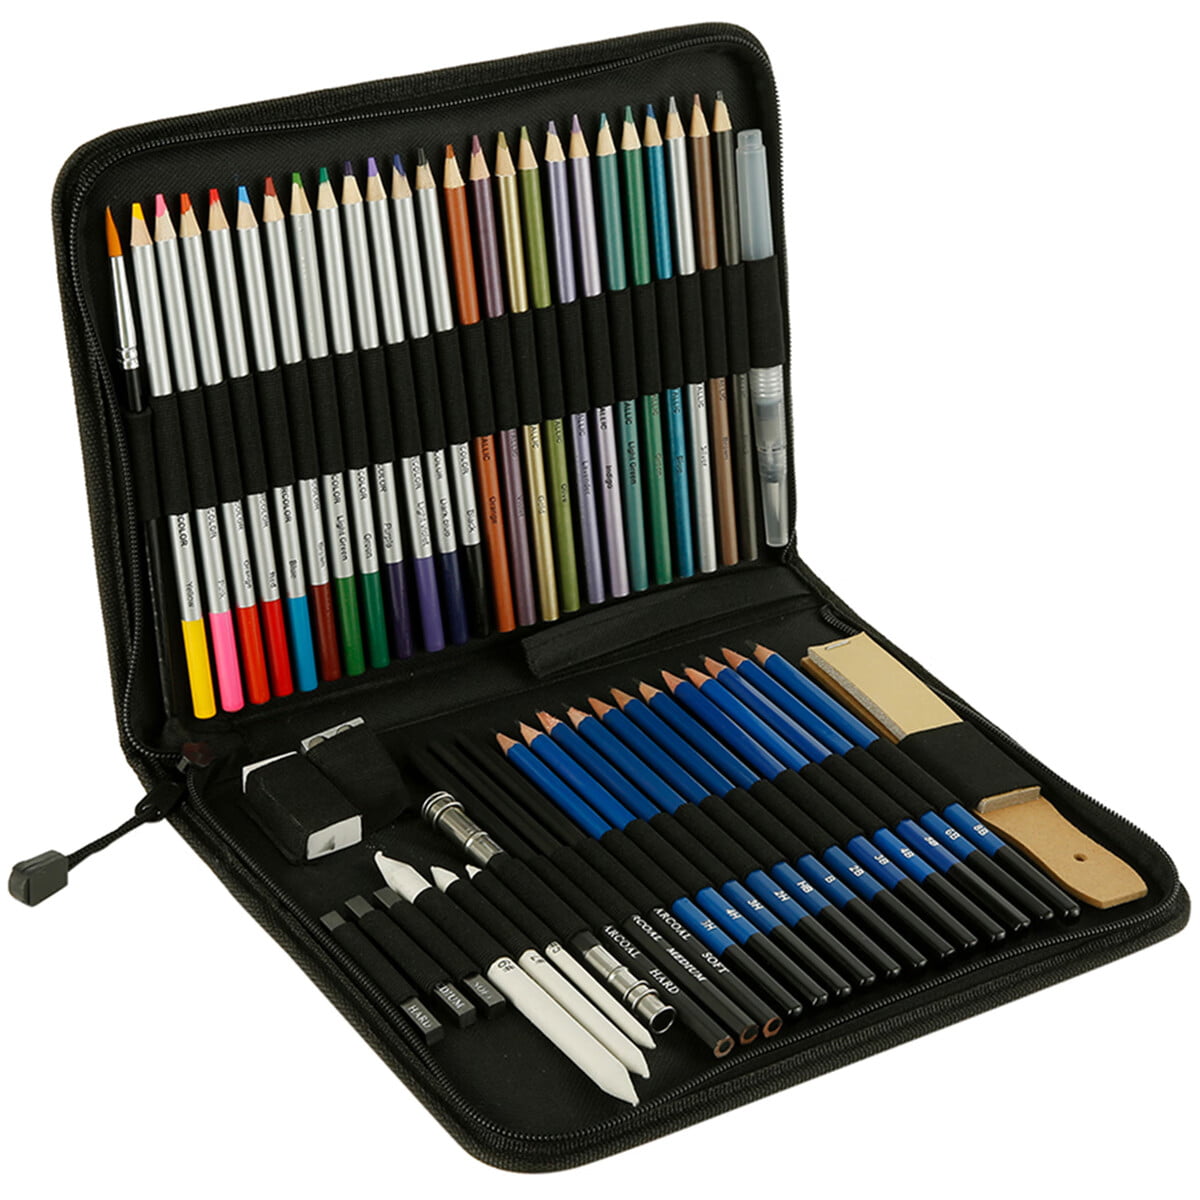 Sketch Drawing Pencils 12 Piece Professional Pencils Set Charcoal Pencils Shading Pencils for Adults Kid Artists